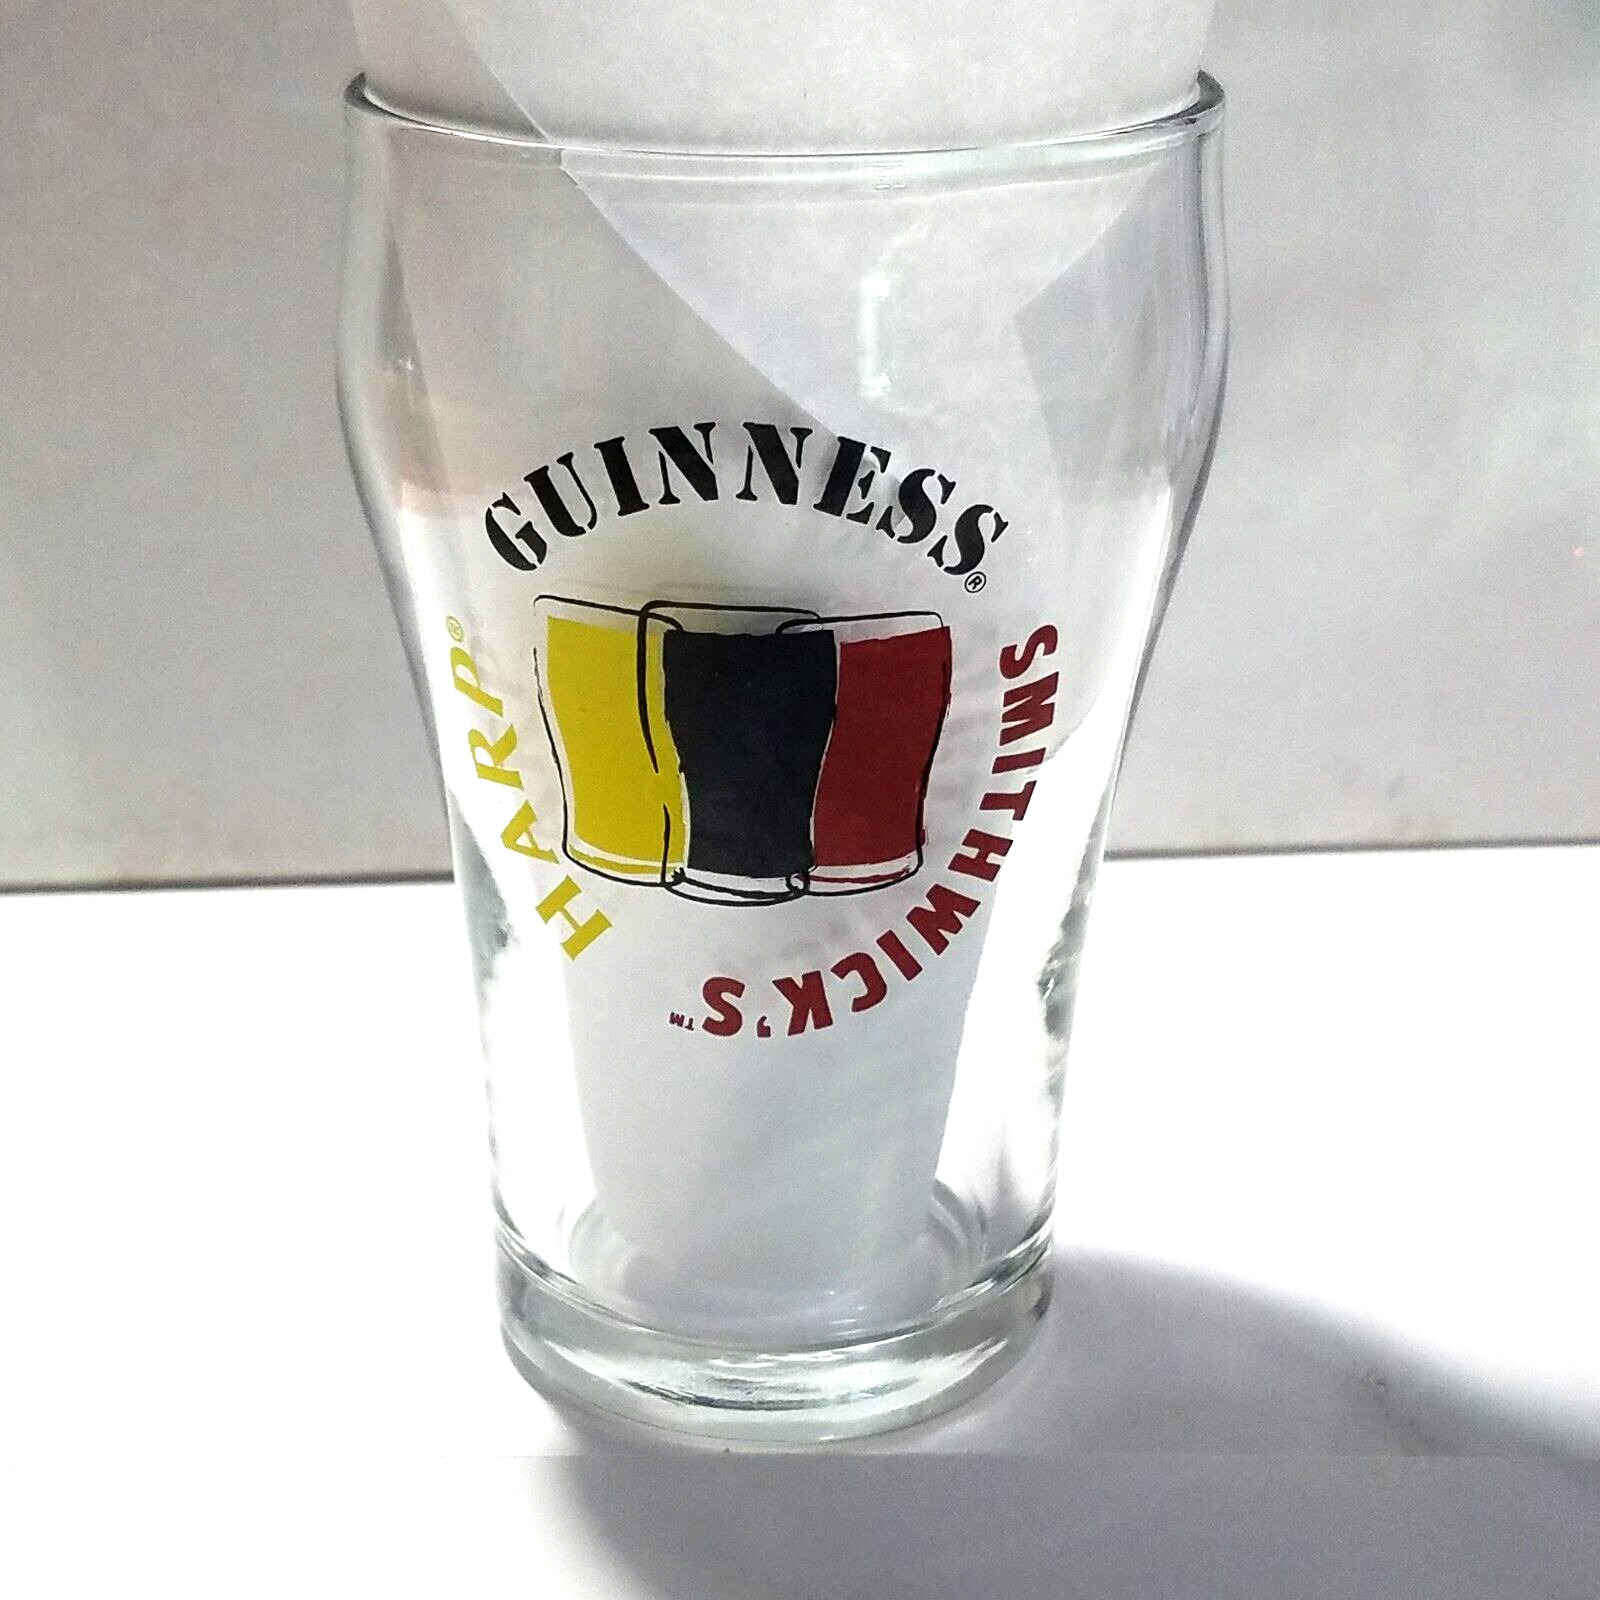 Guinness Smithwick's Harp Three Beers Strong Beer Taster Sampler Glass 4